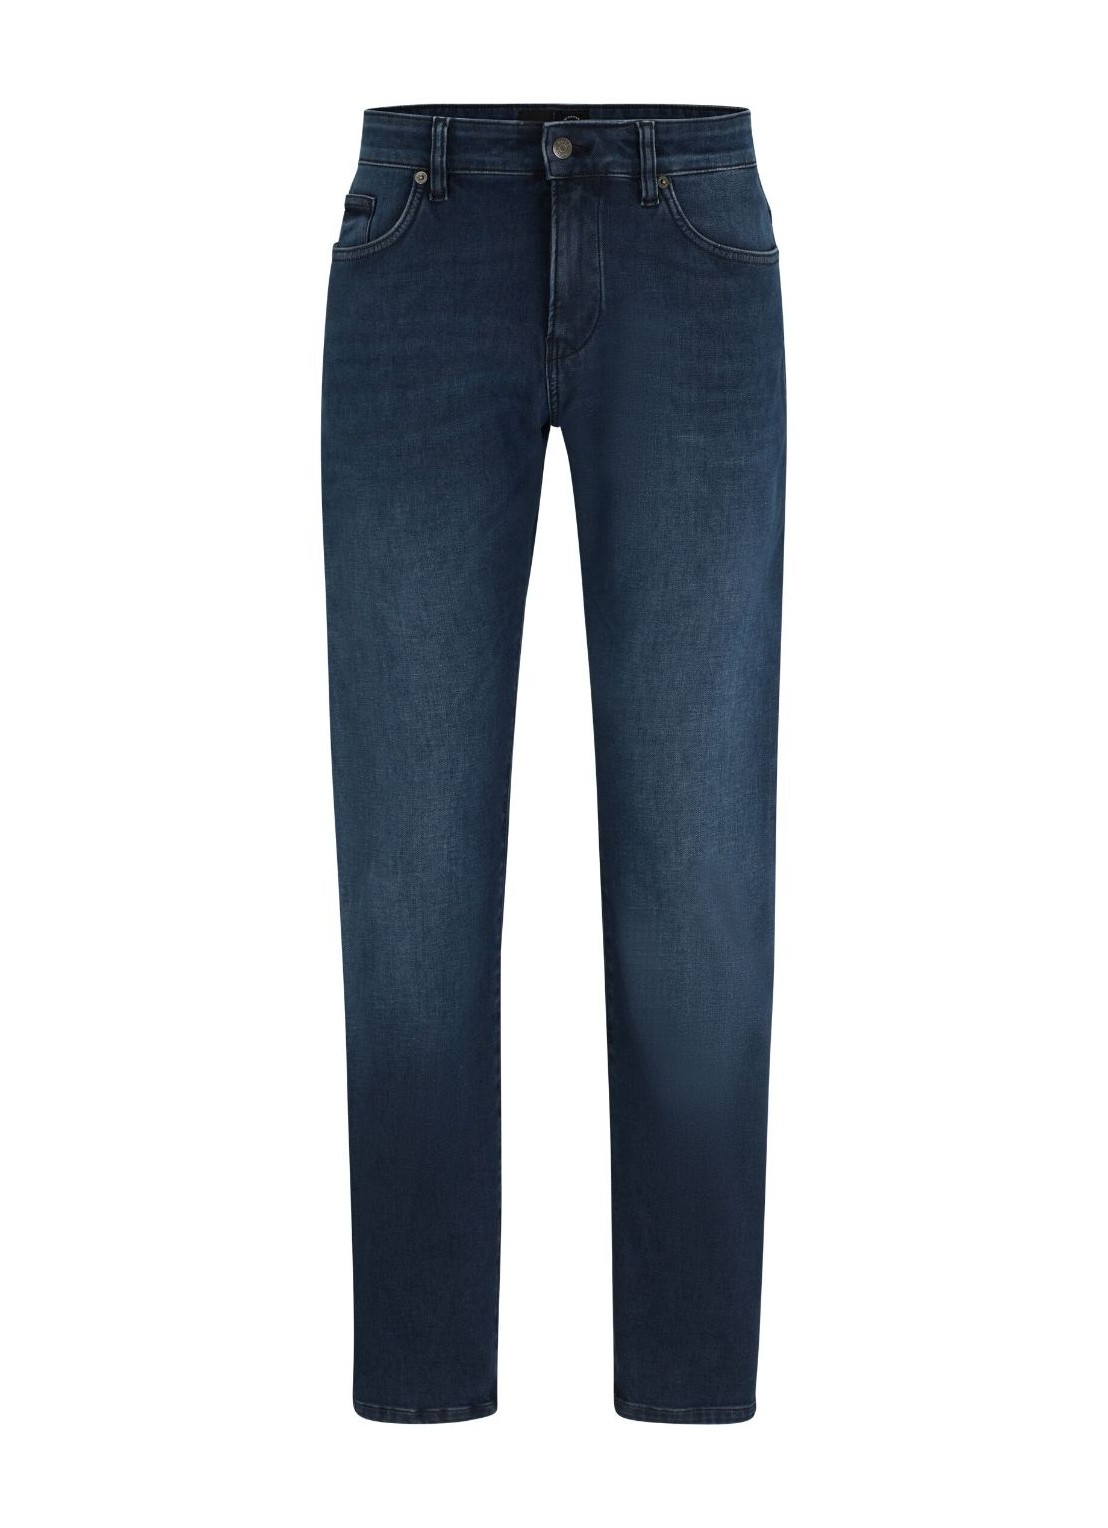 Pantalon jeans boss denim man p-delaware 3-1 50508121 421 talla 38
 